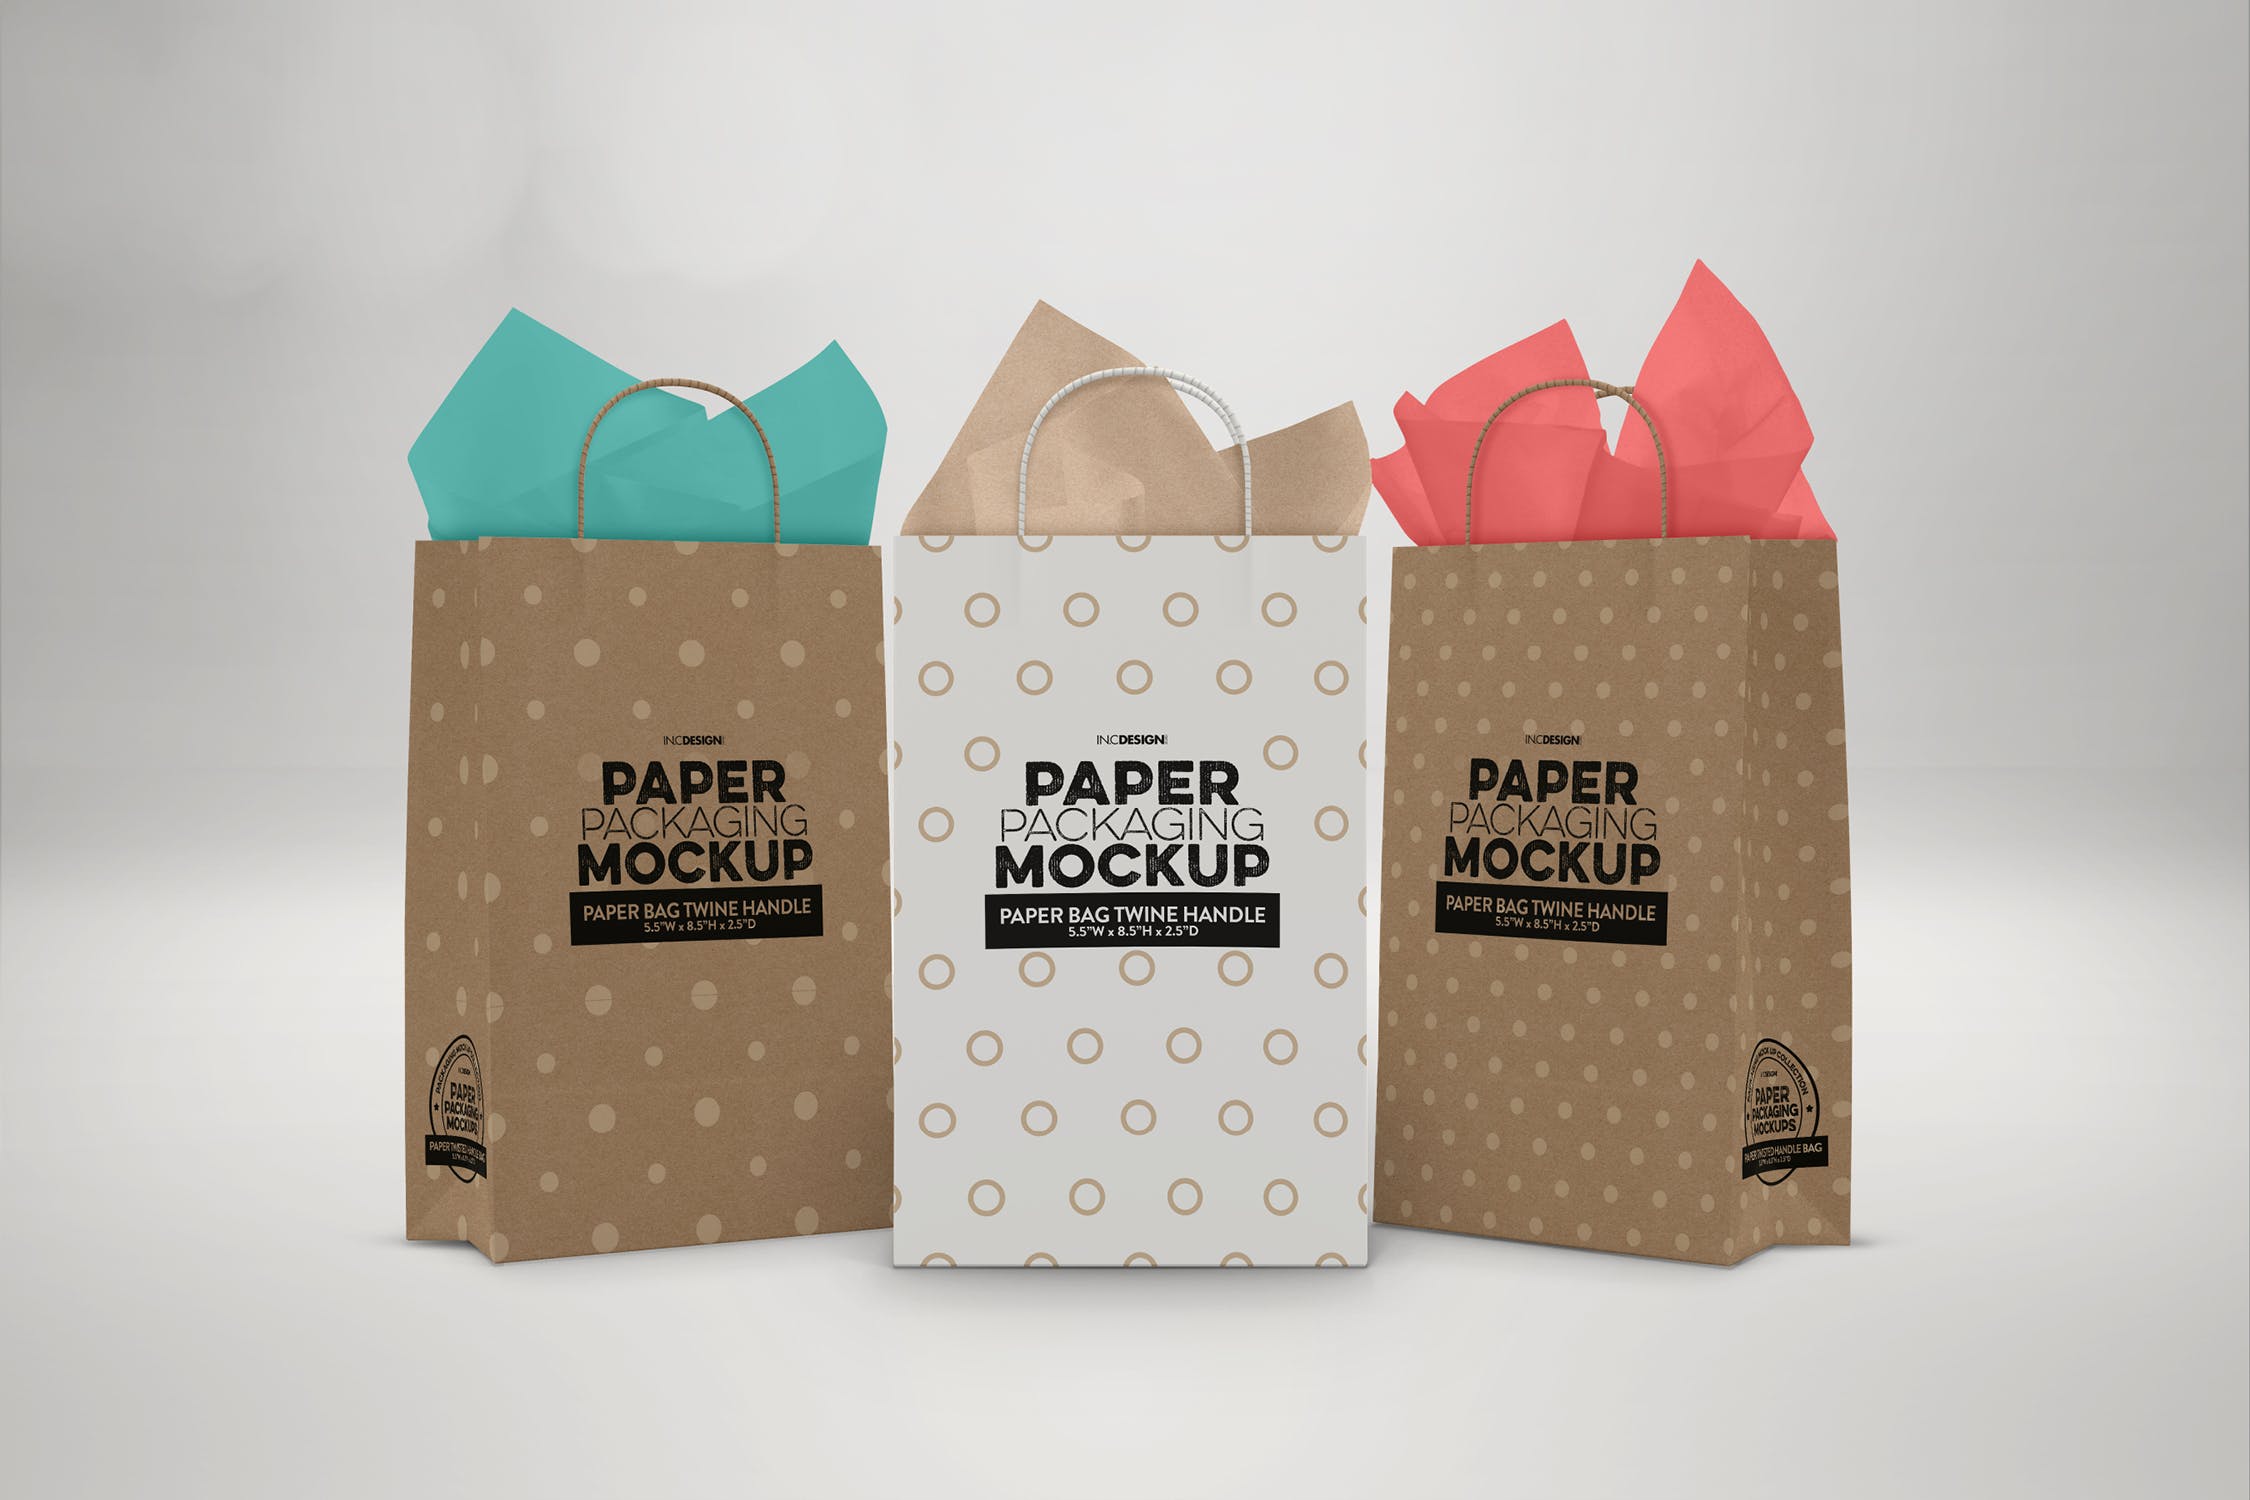 购物纸袋设计图片预览样机模板 Paper Bags Twine Handles Packaging Mockup插图(1)